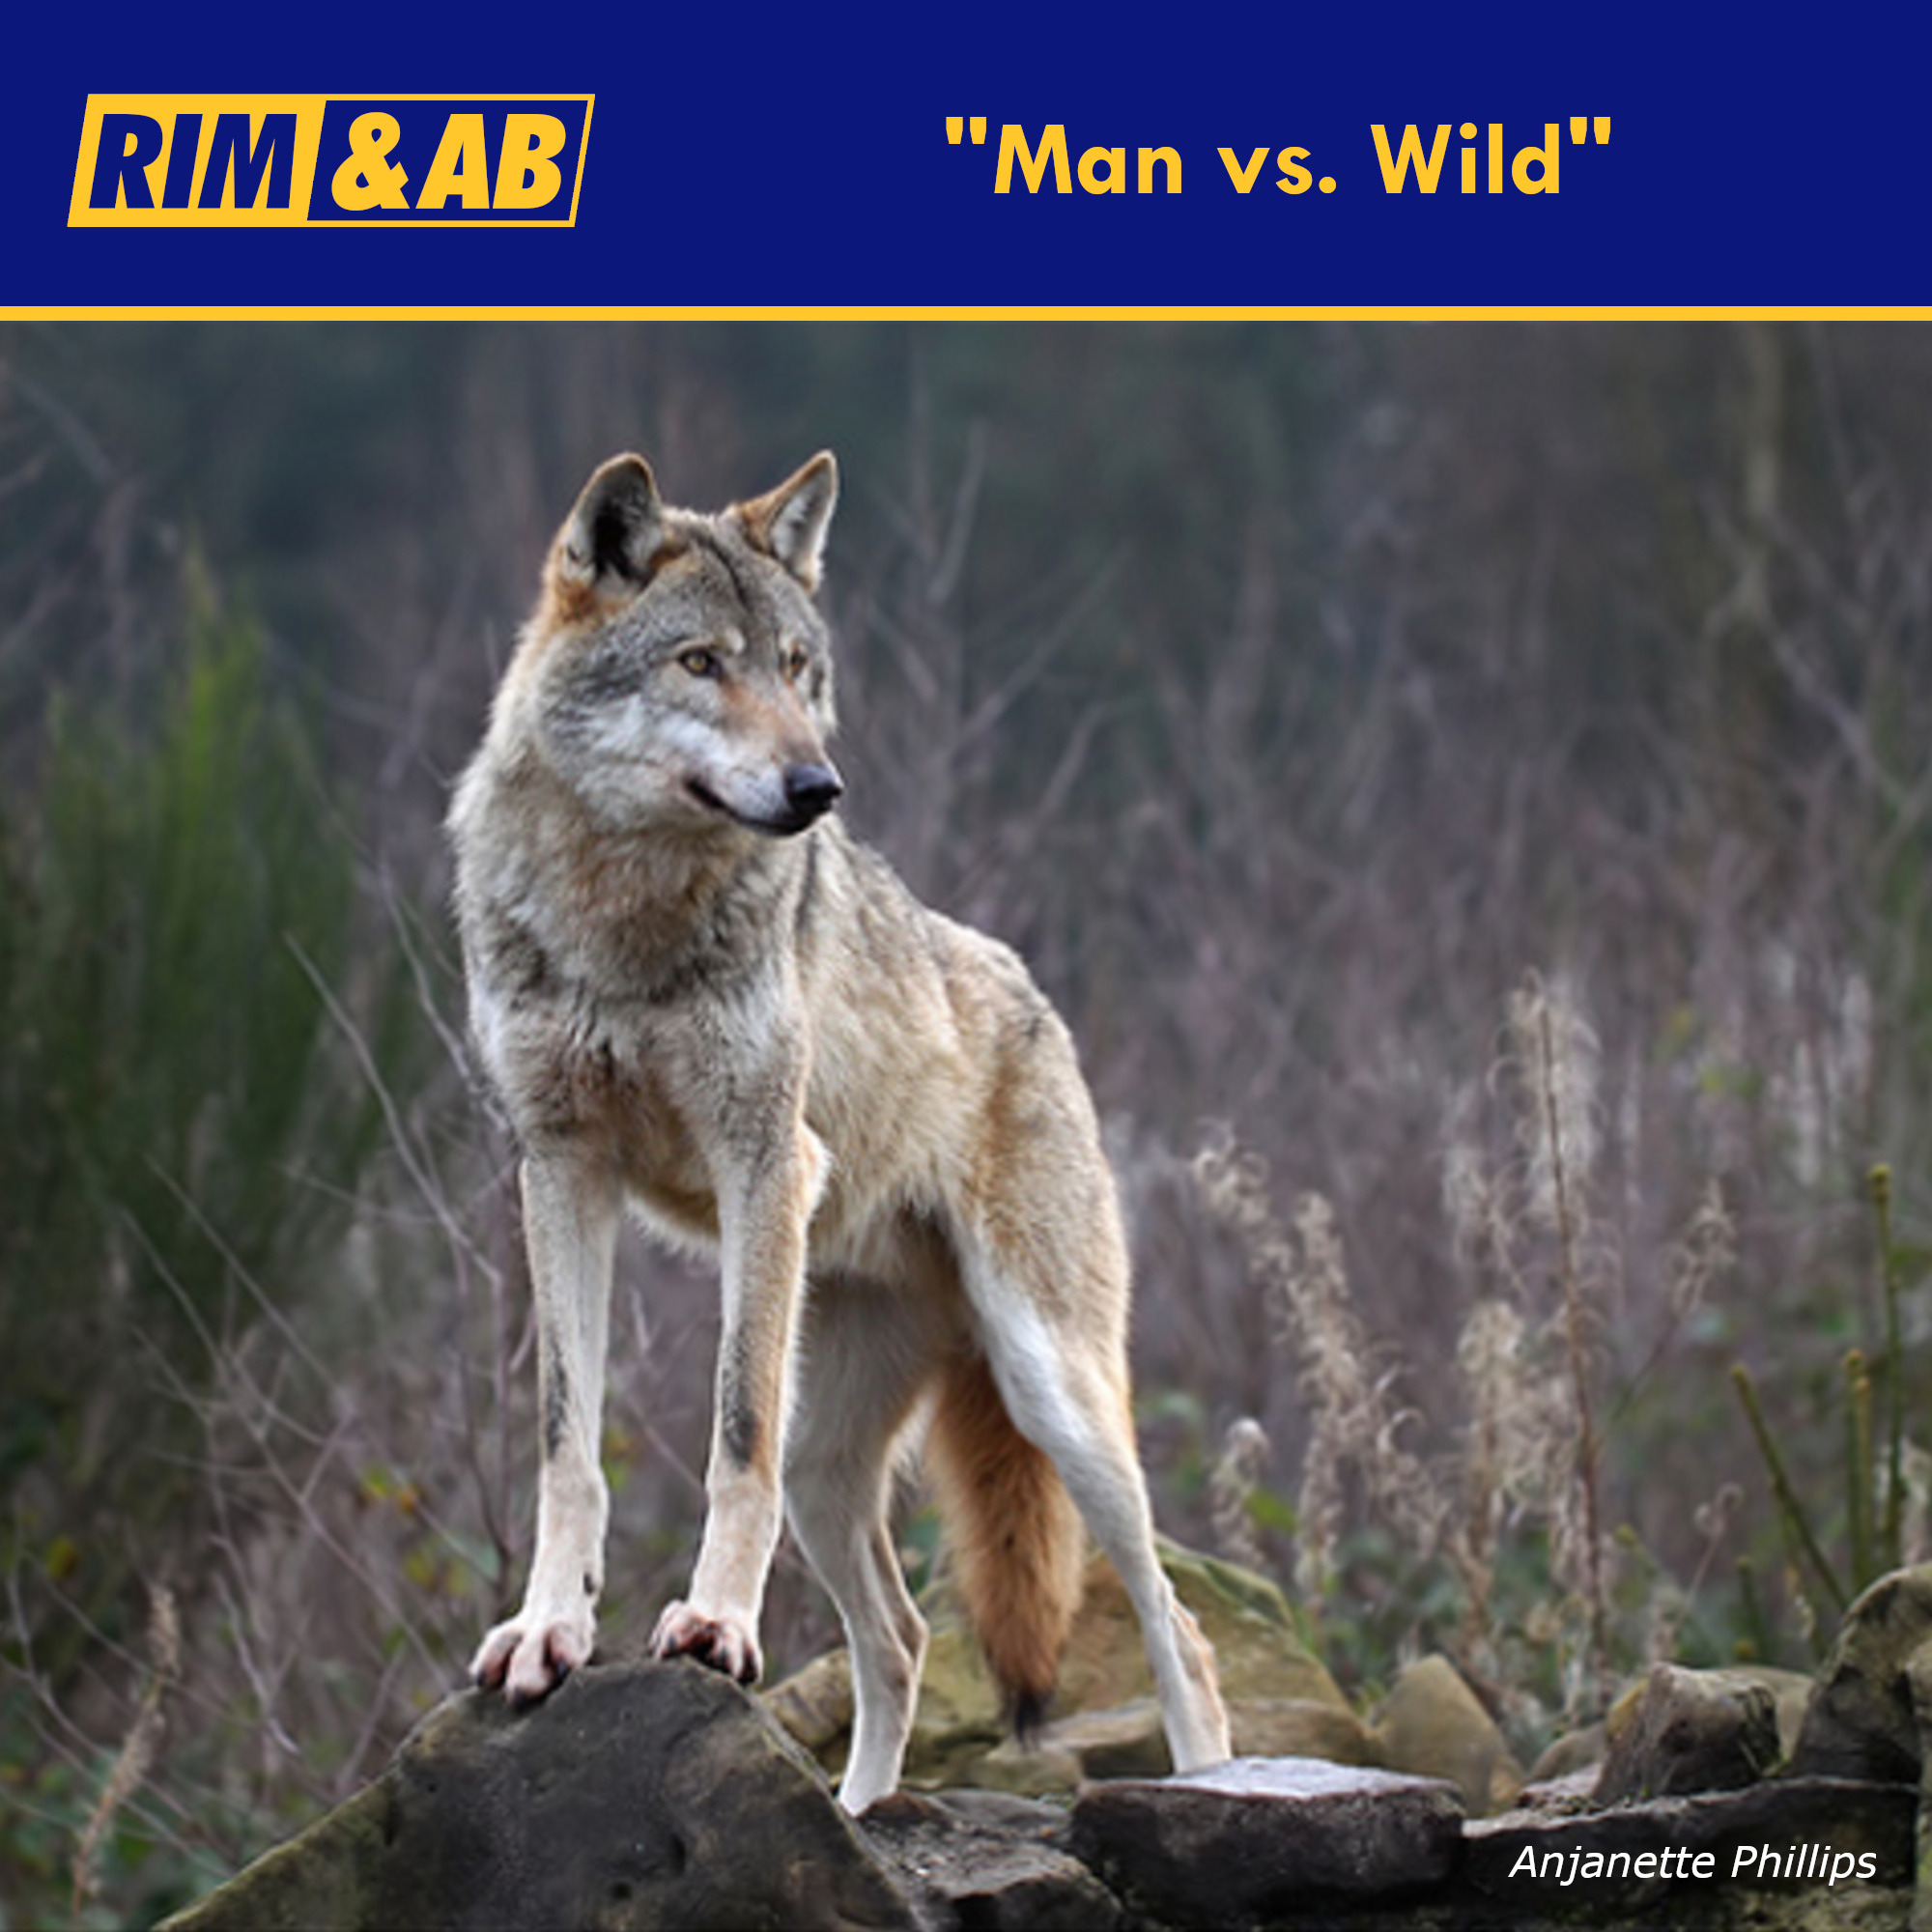 cover art for "Man vs. Wild" | RIMCAST 3/10/17